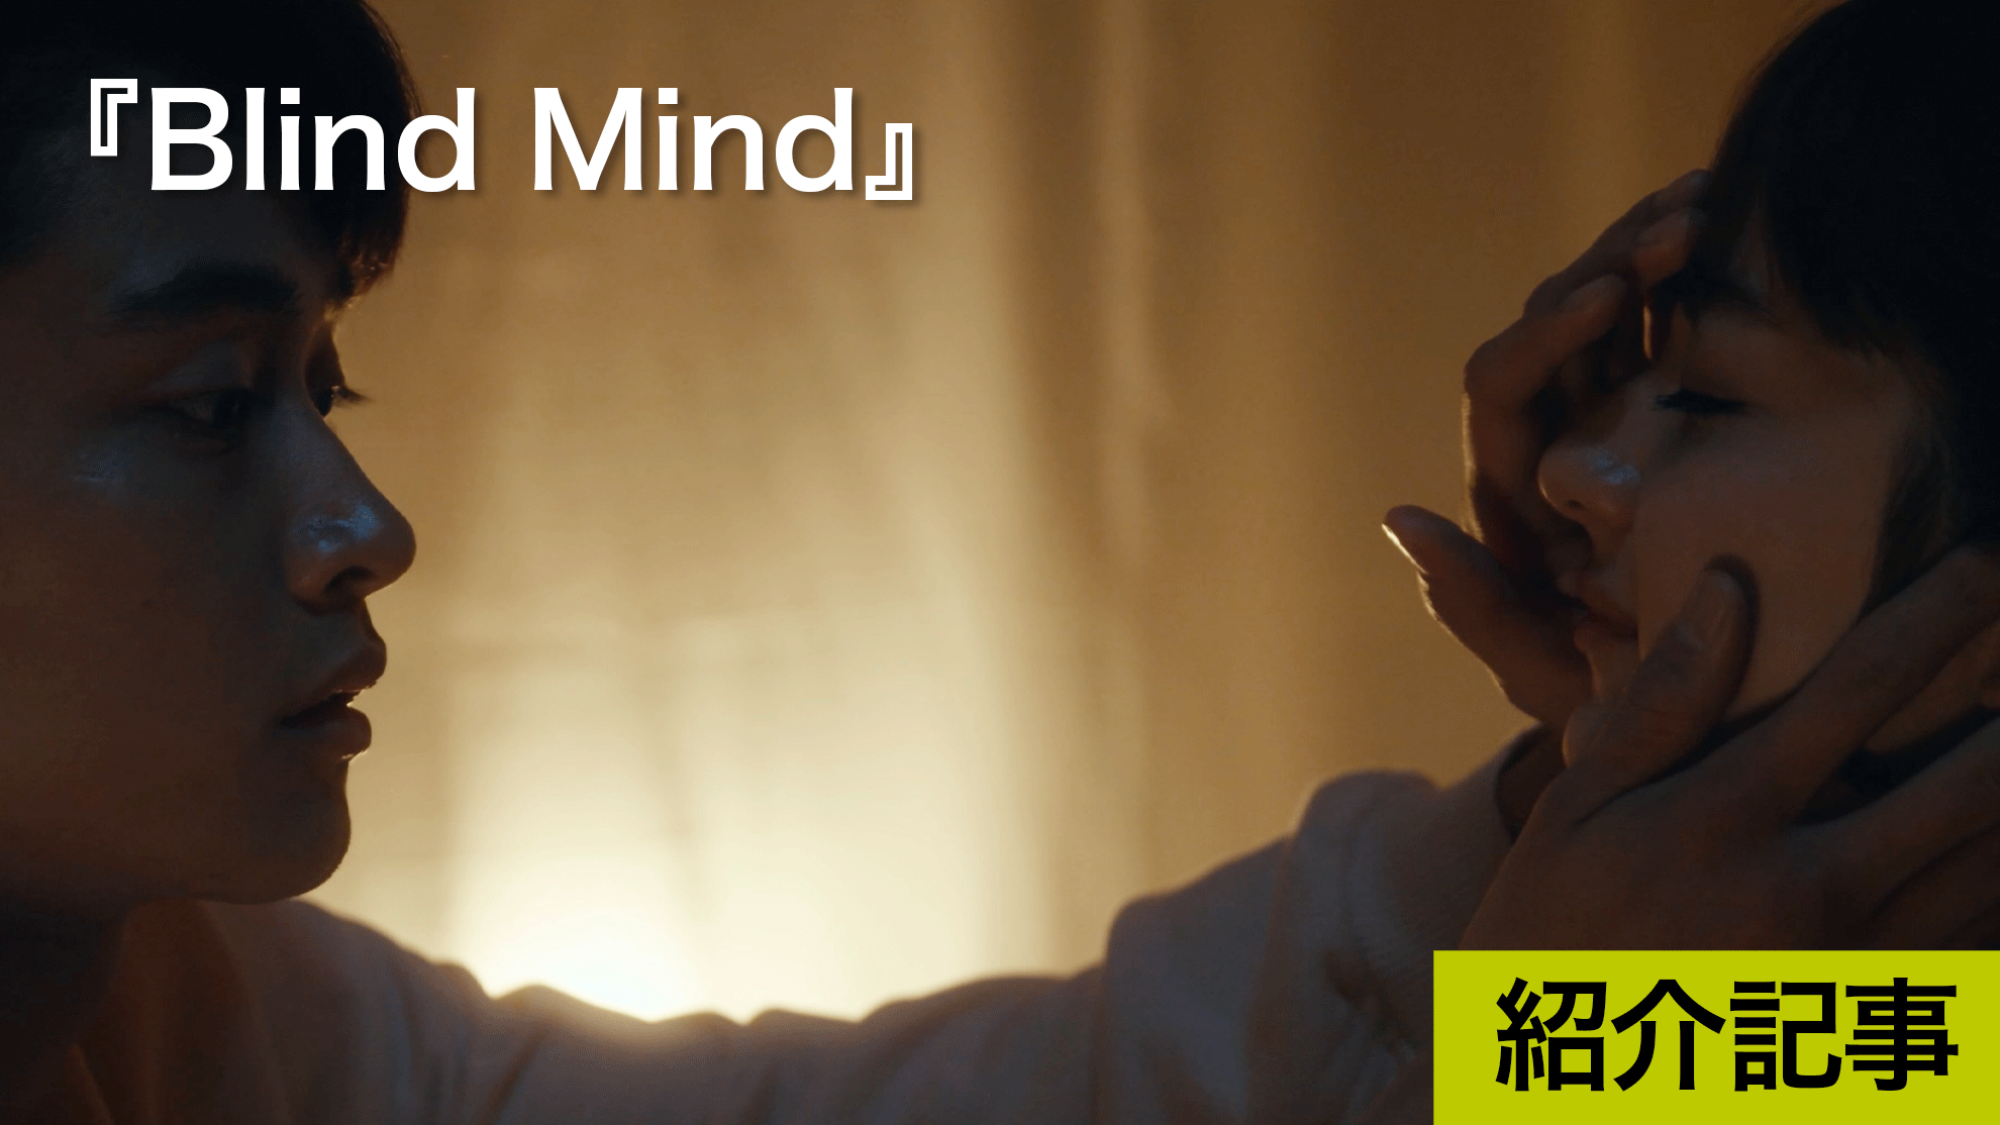 『Blind Mind』初日舞台挨拶レポート「祖母が盲目だったことなどから着想を得て、物語を膨らませていった」矢野友里恵監督